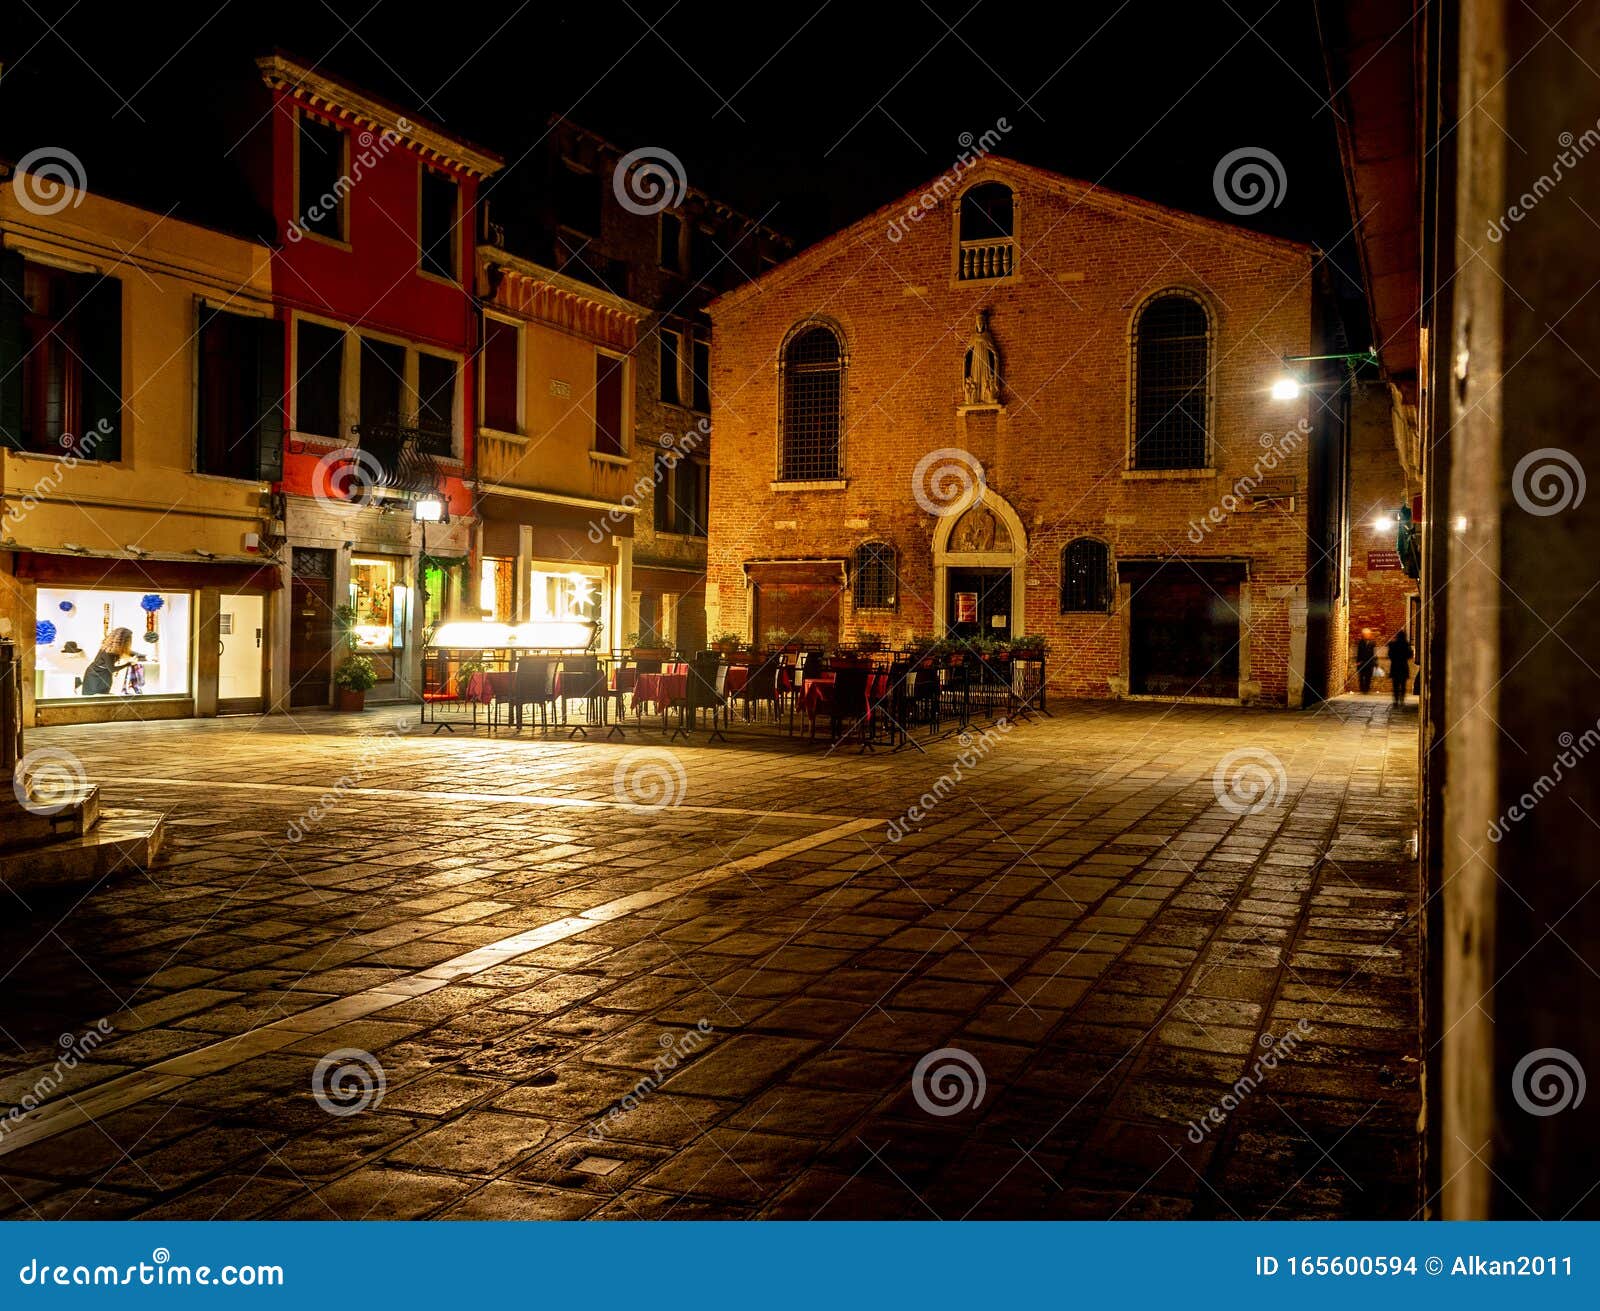 san toma square in venice at night